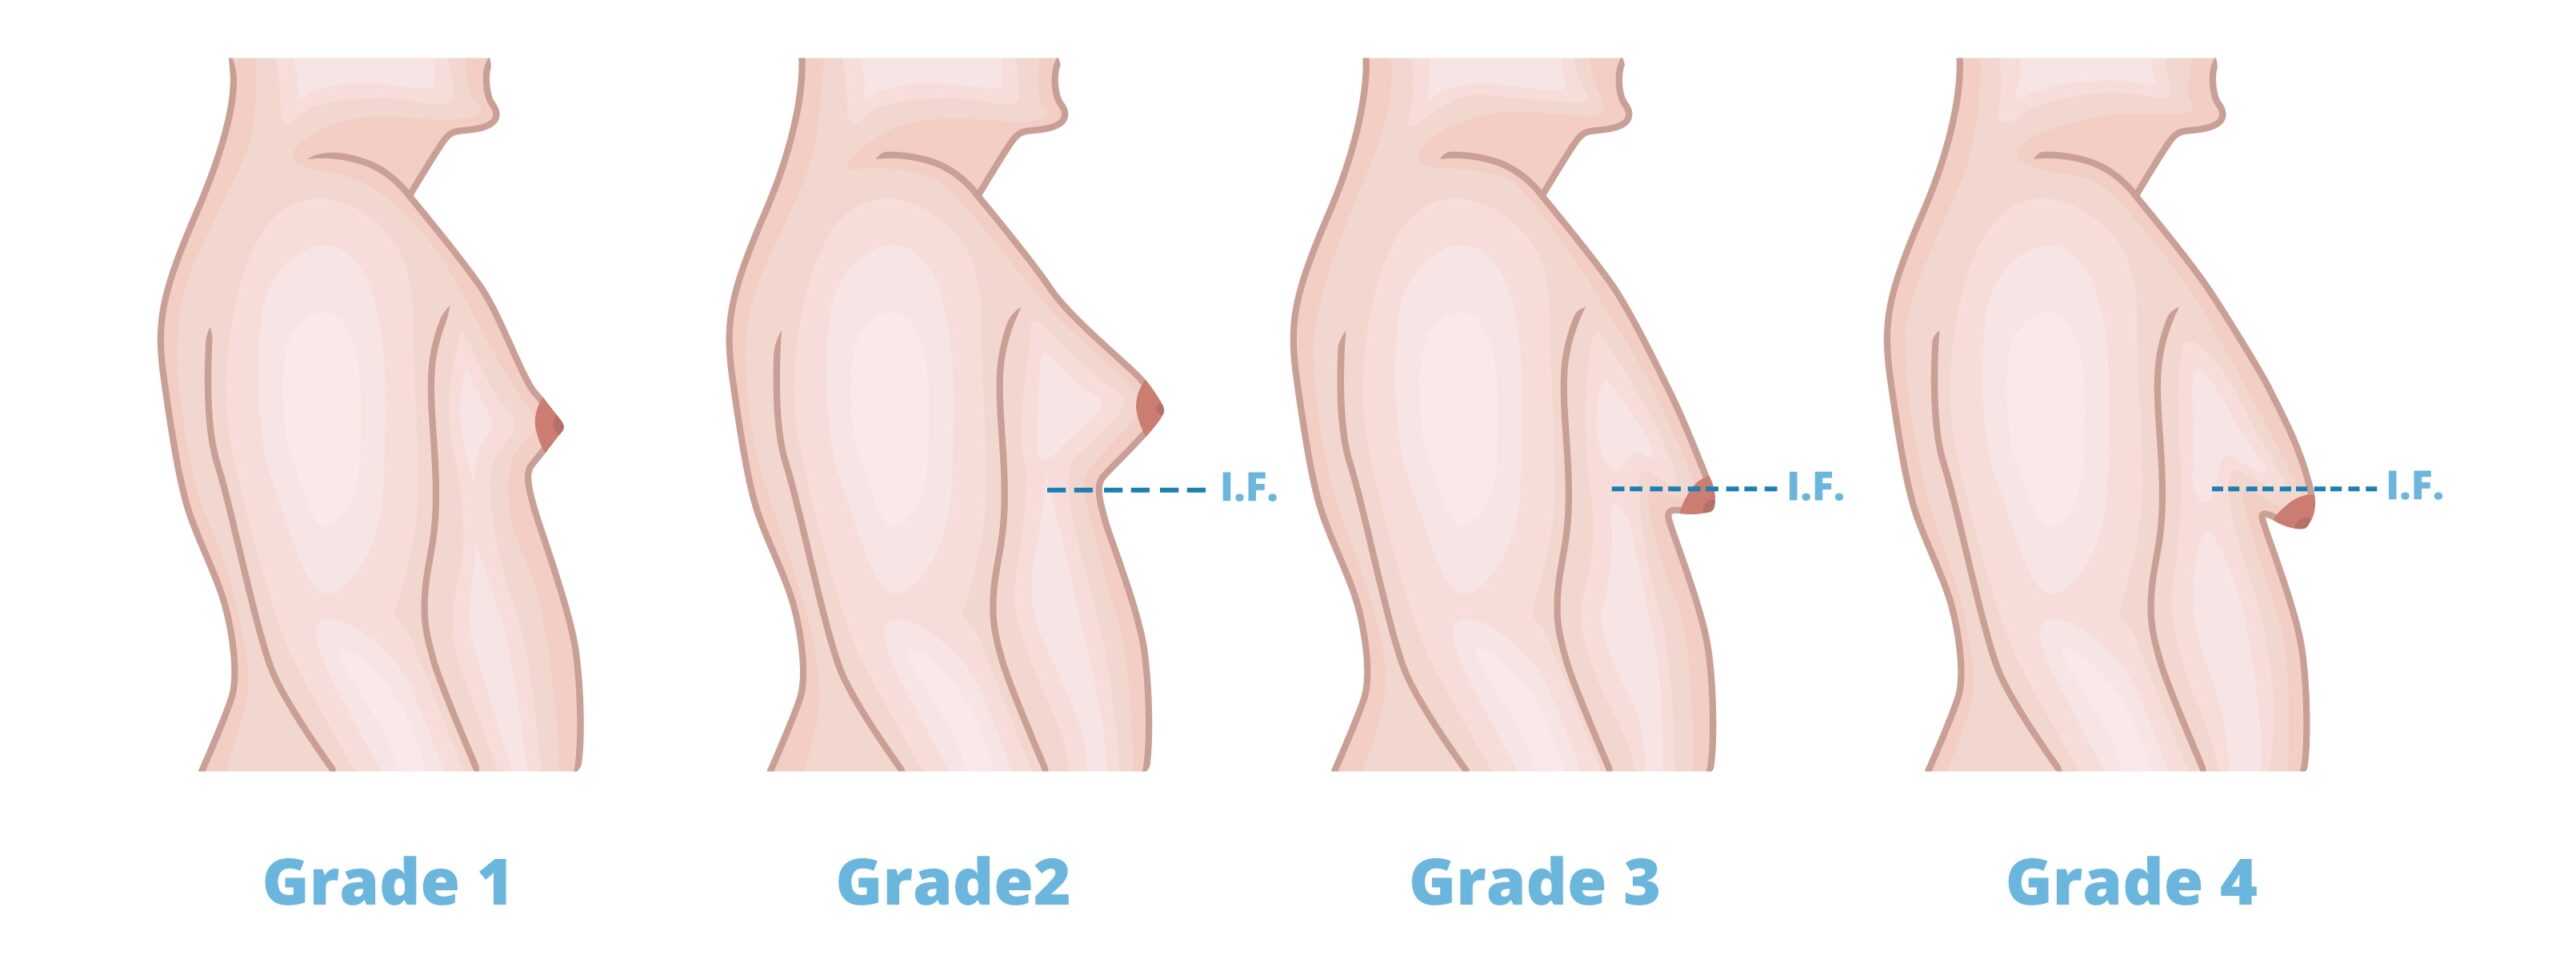 Grades of gynecomastia